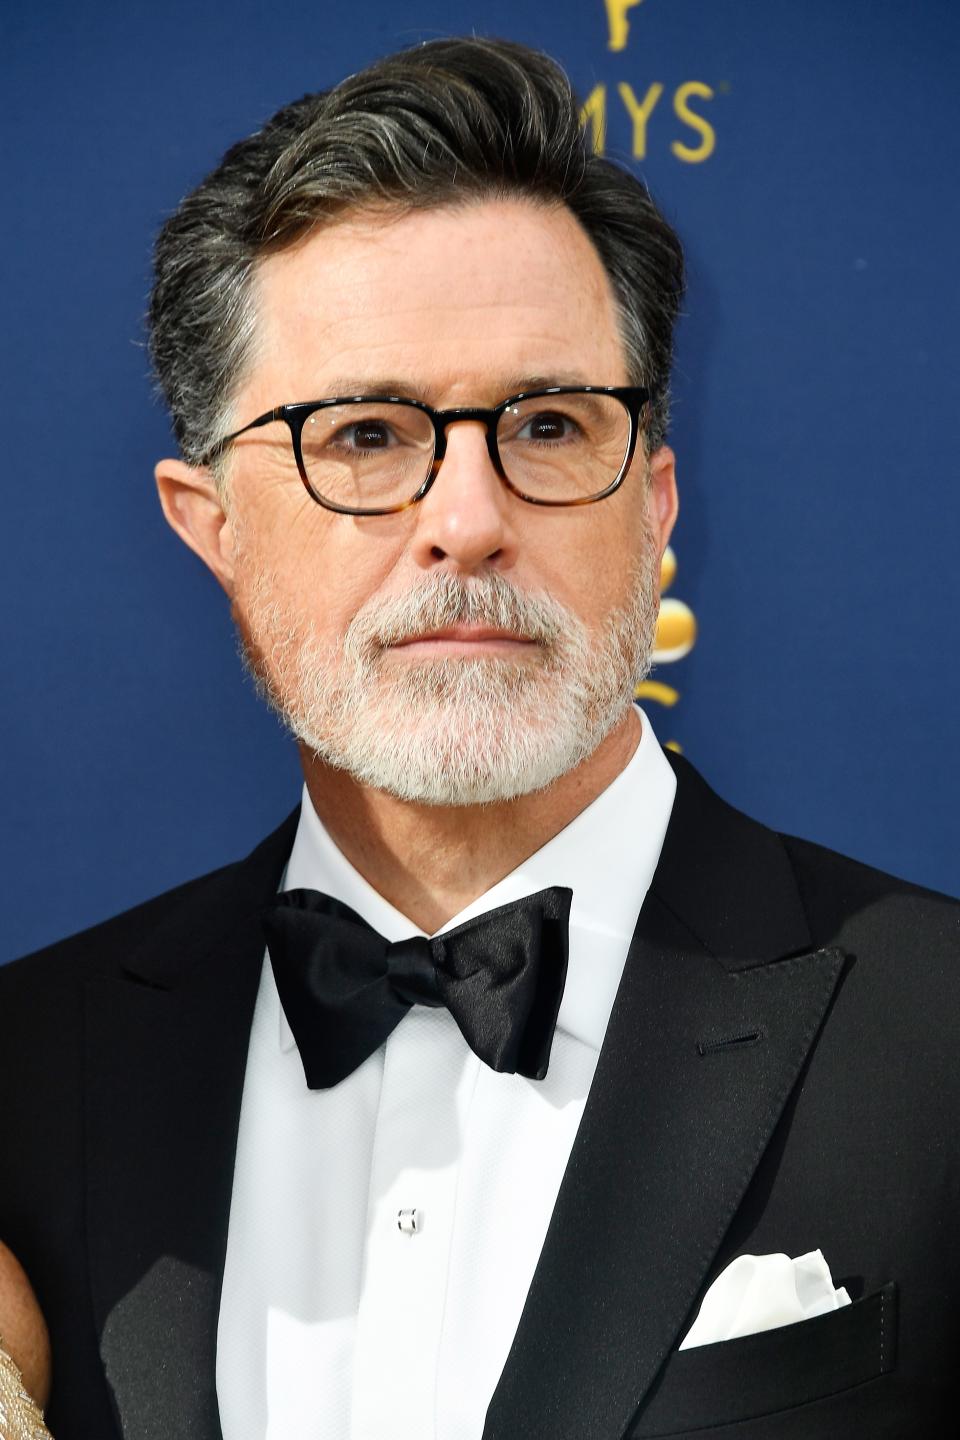 Stephen Colbert's Silver Beard